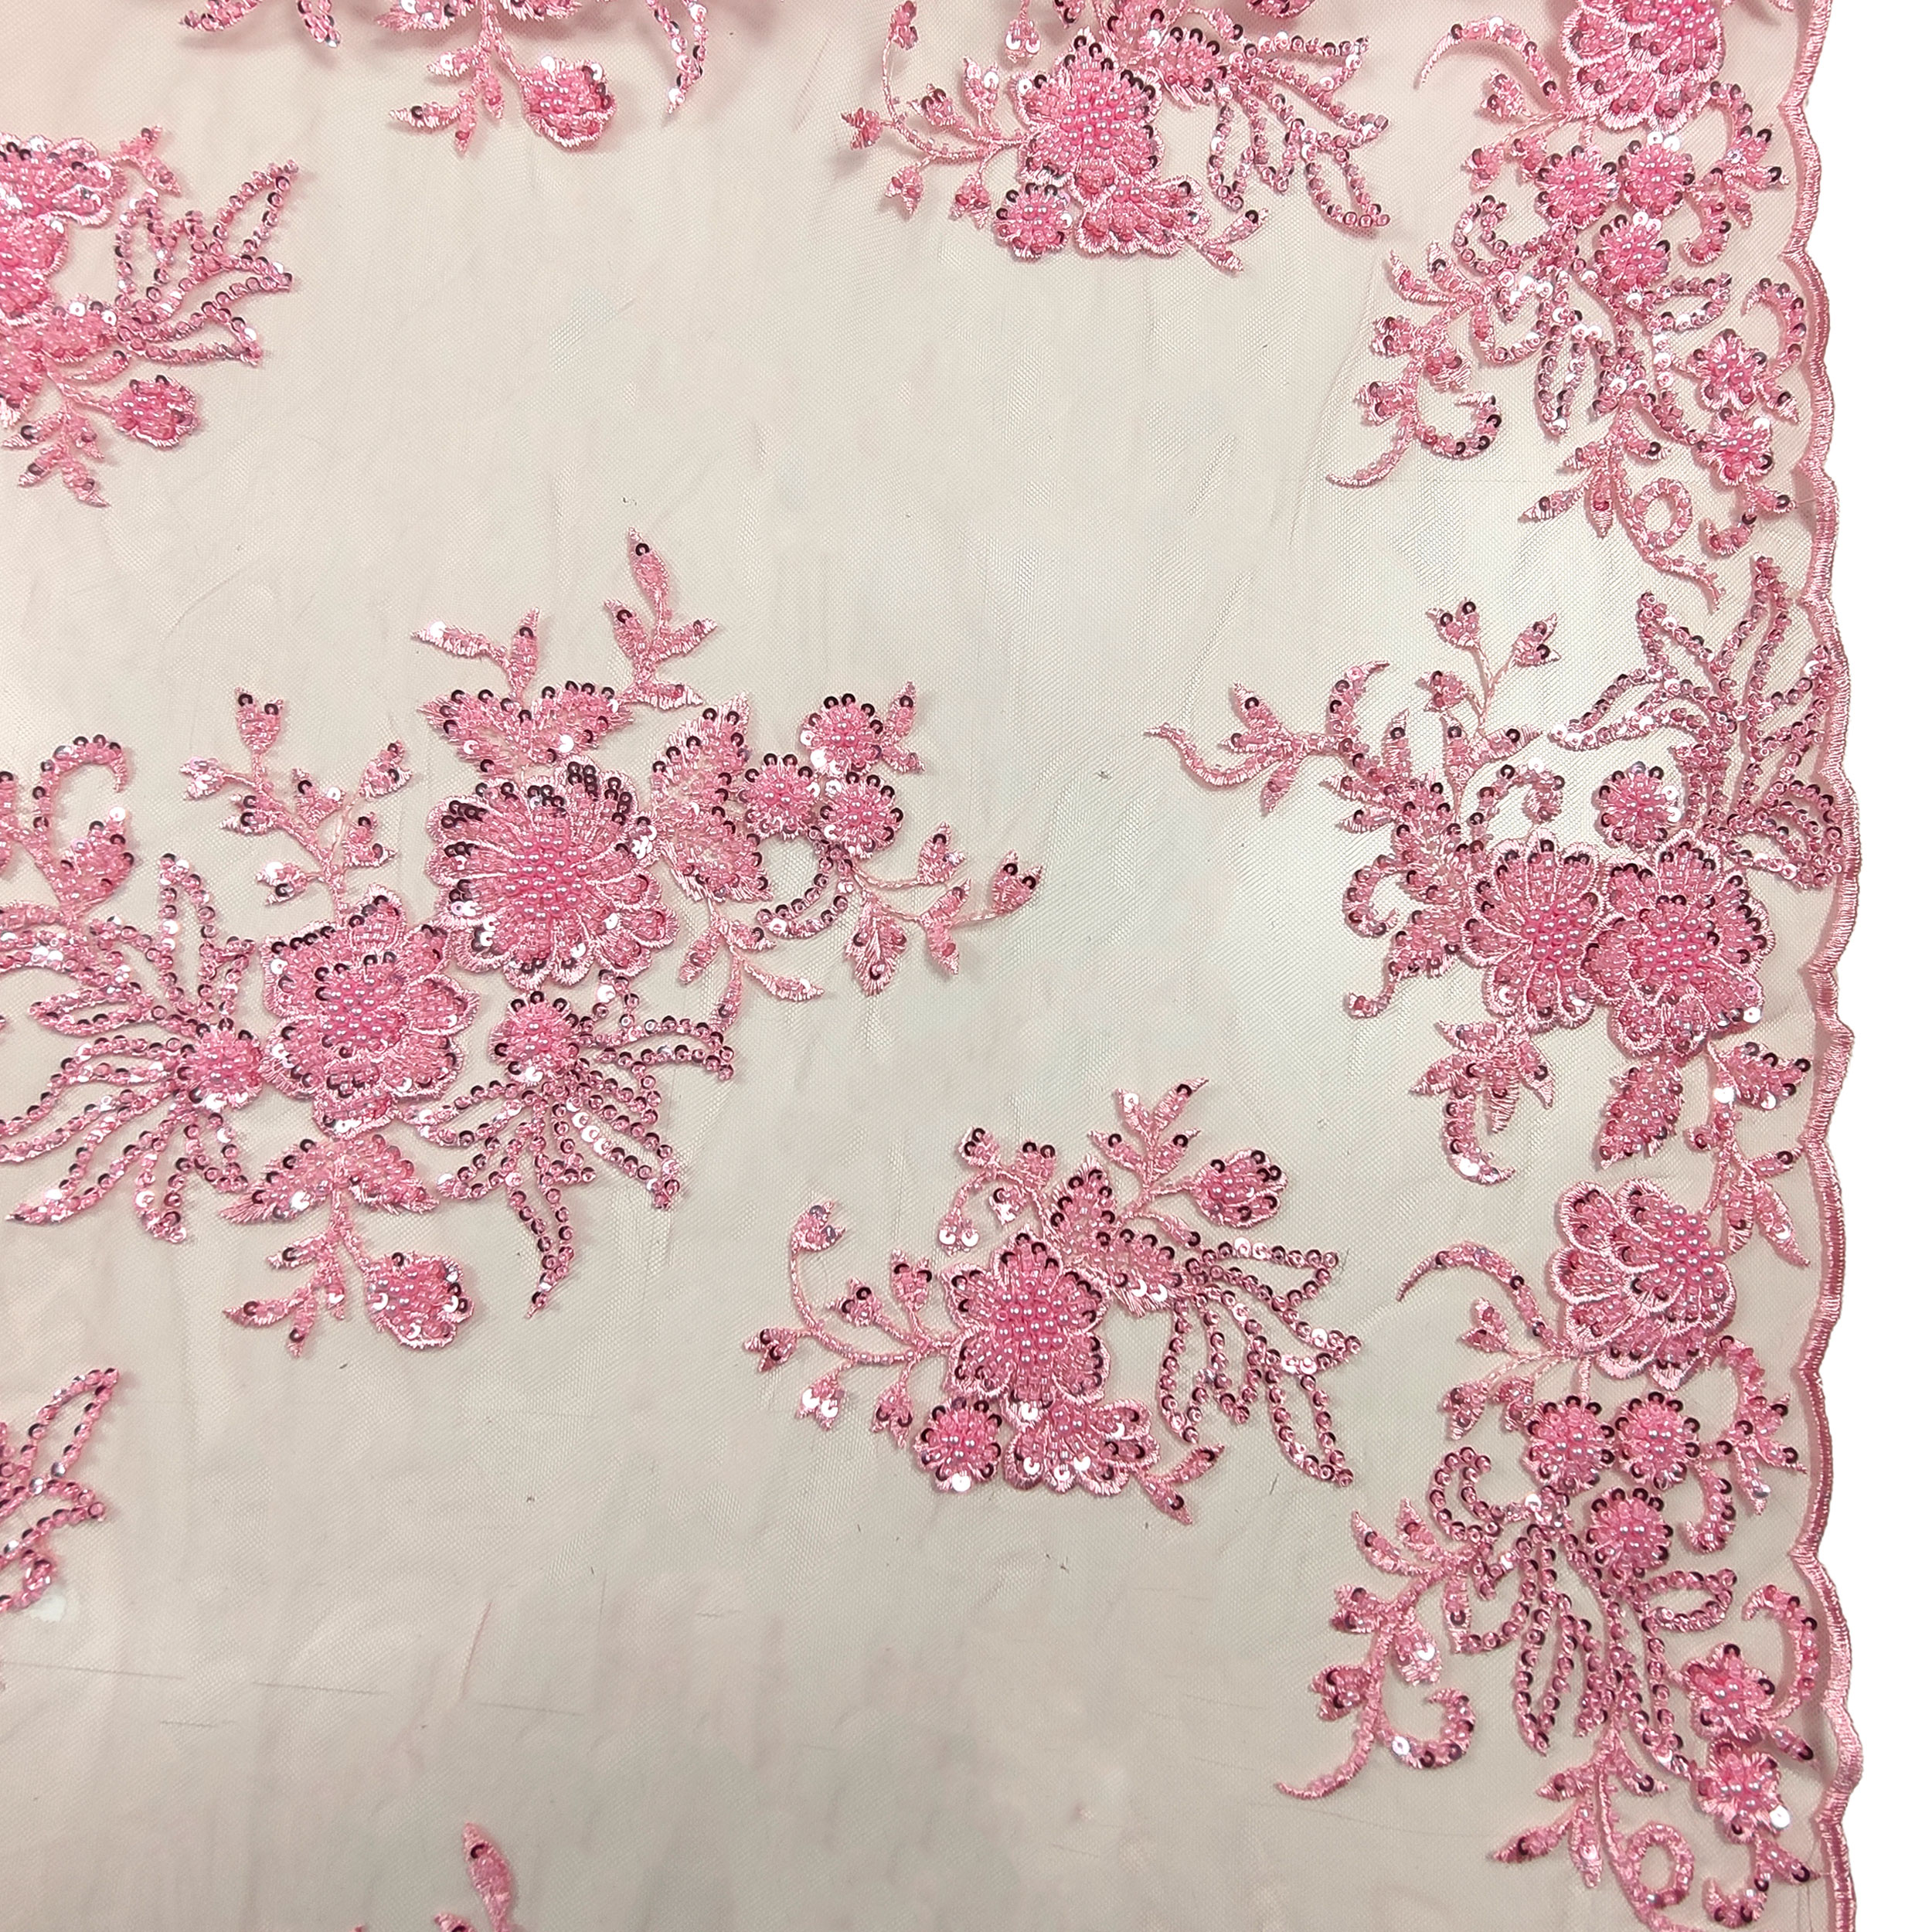 tessuto pizzo moda fiori rosa